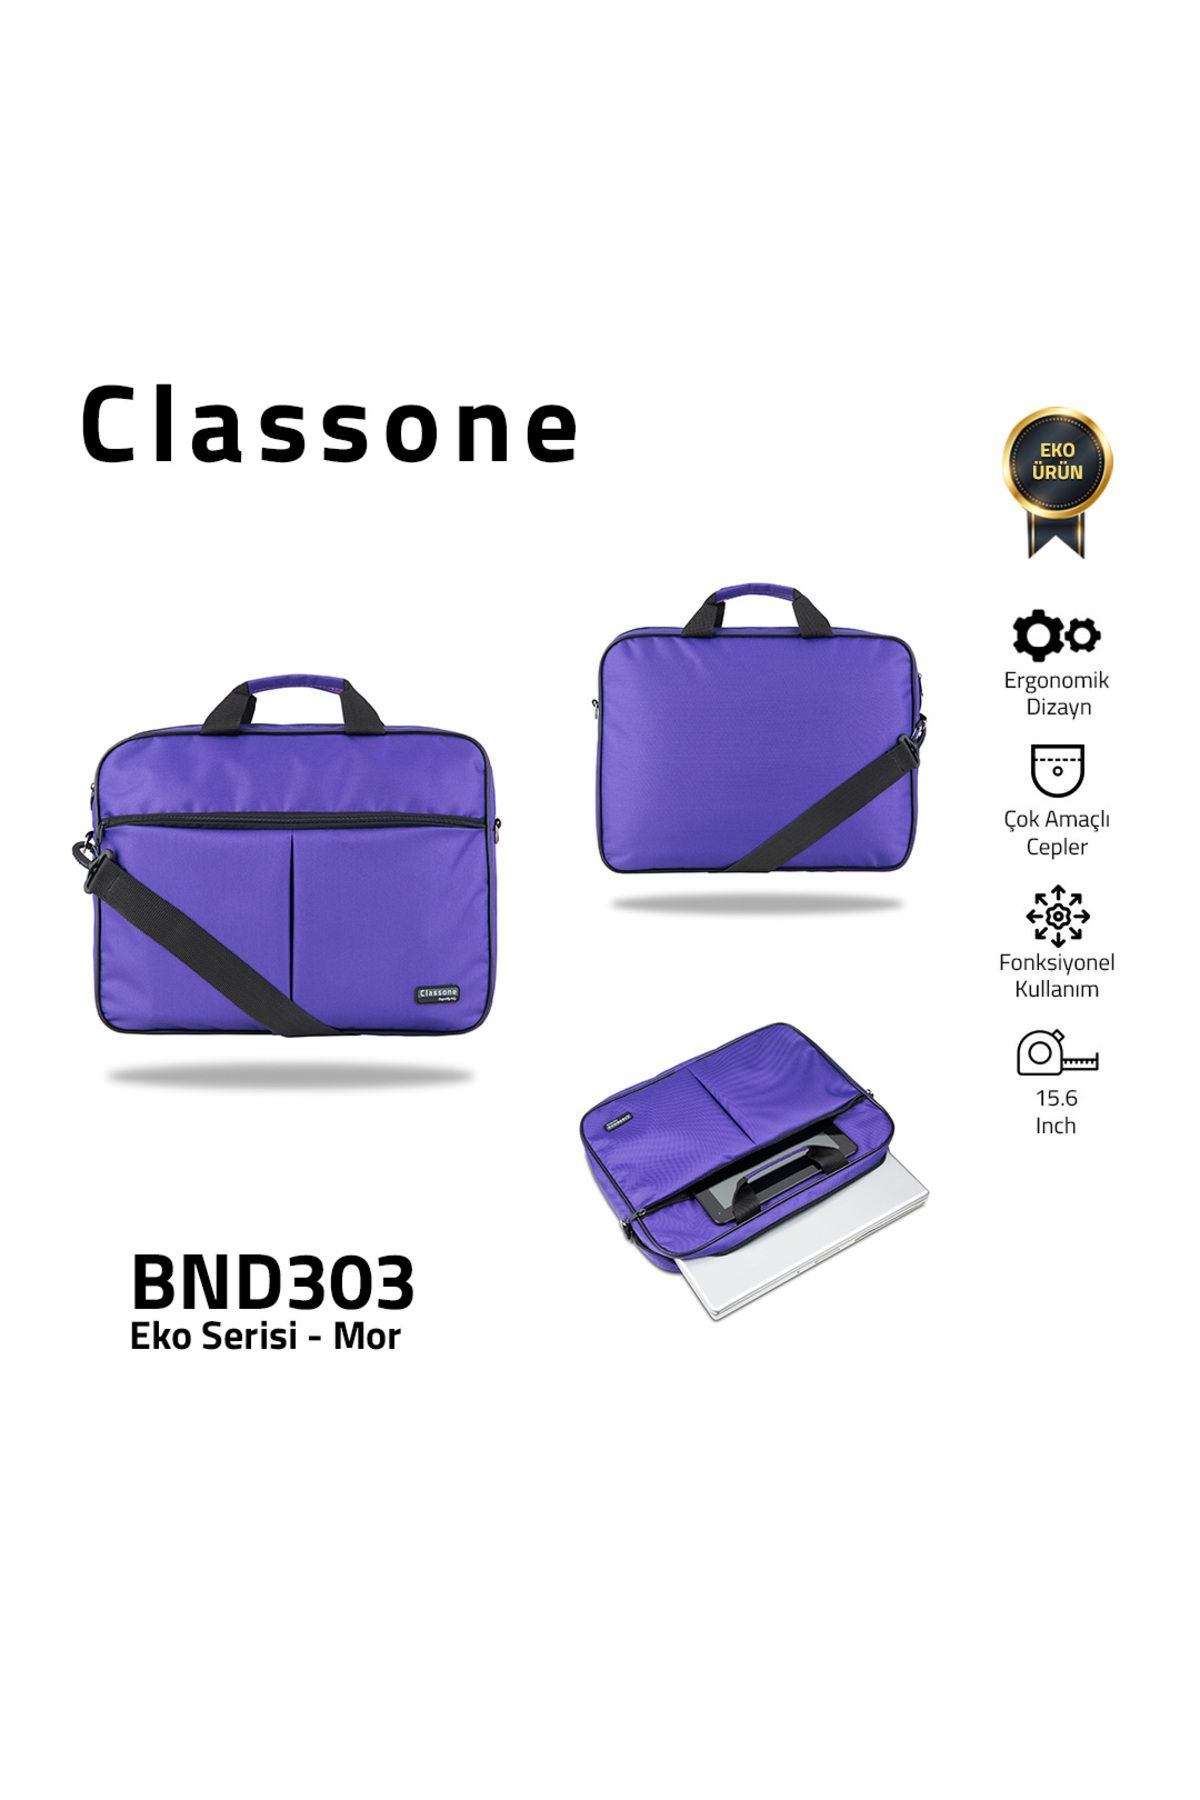 Classone BND303 Eko Serisi -Mor